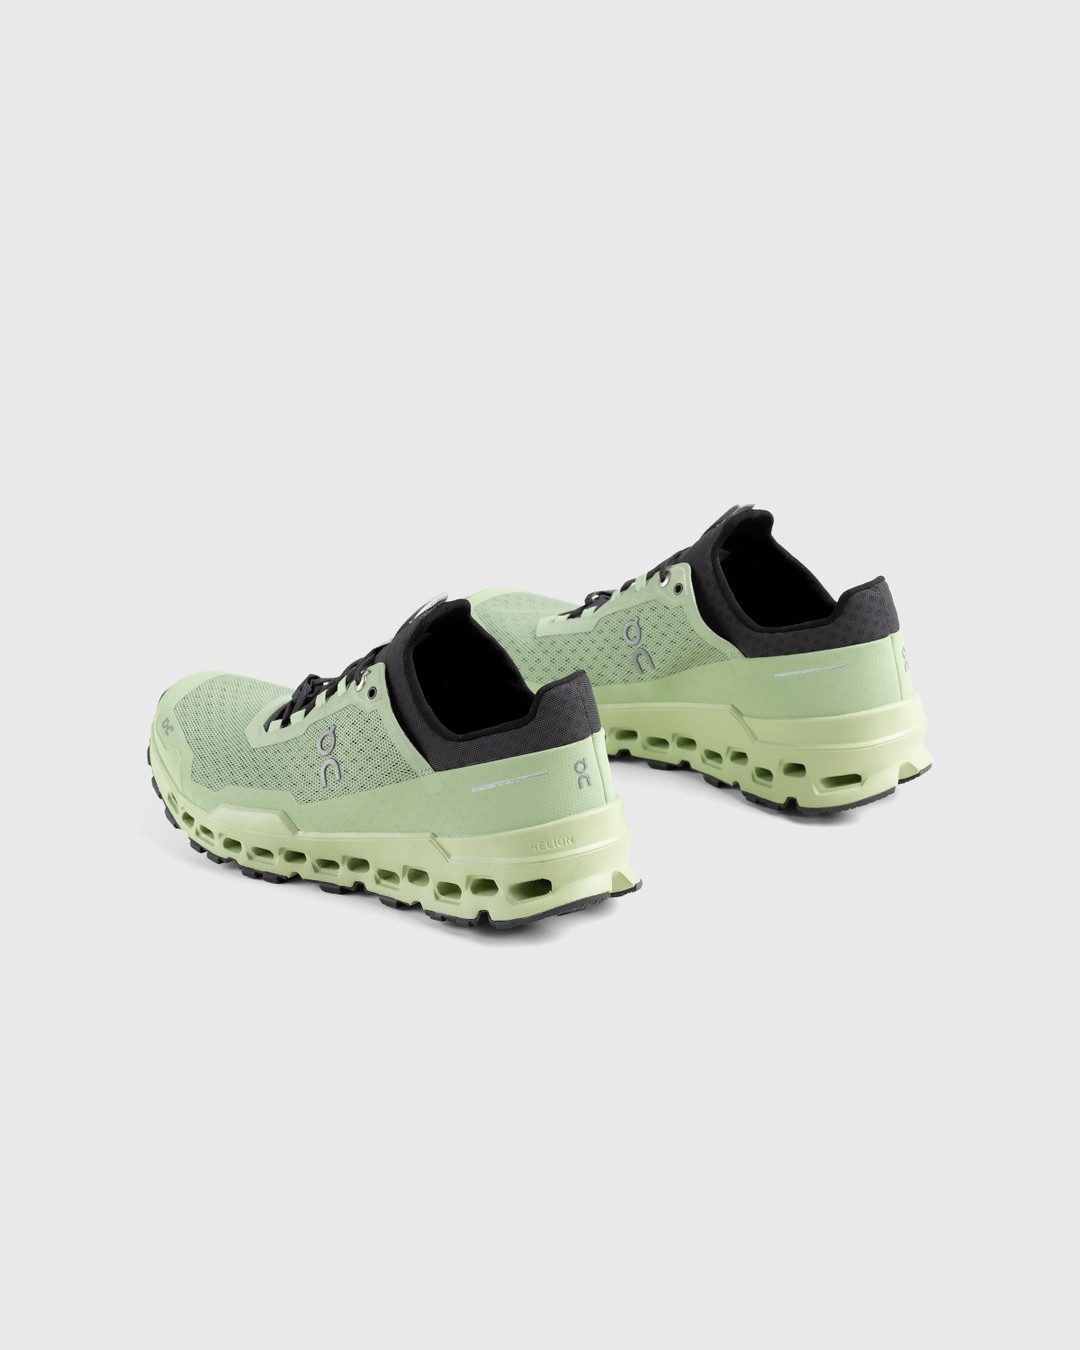 On – Cloudultra Vine/Meadow - Low Top Sneakers - Green - Image 4